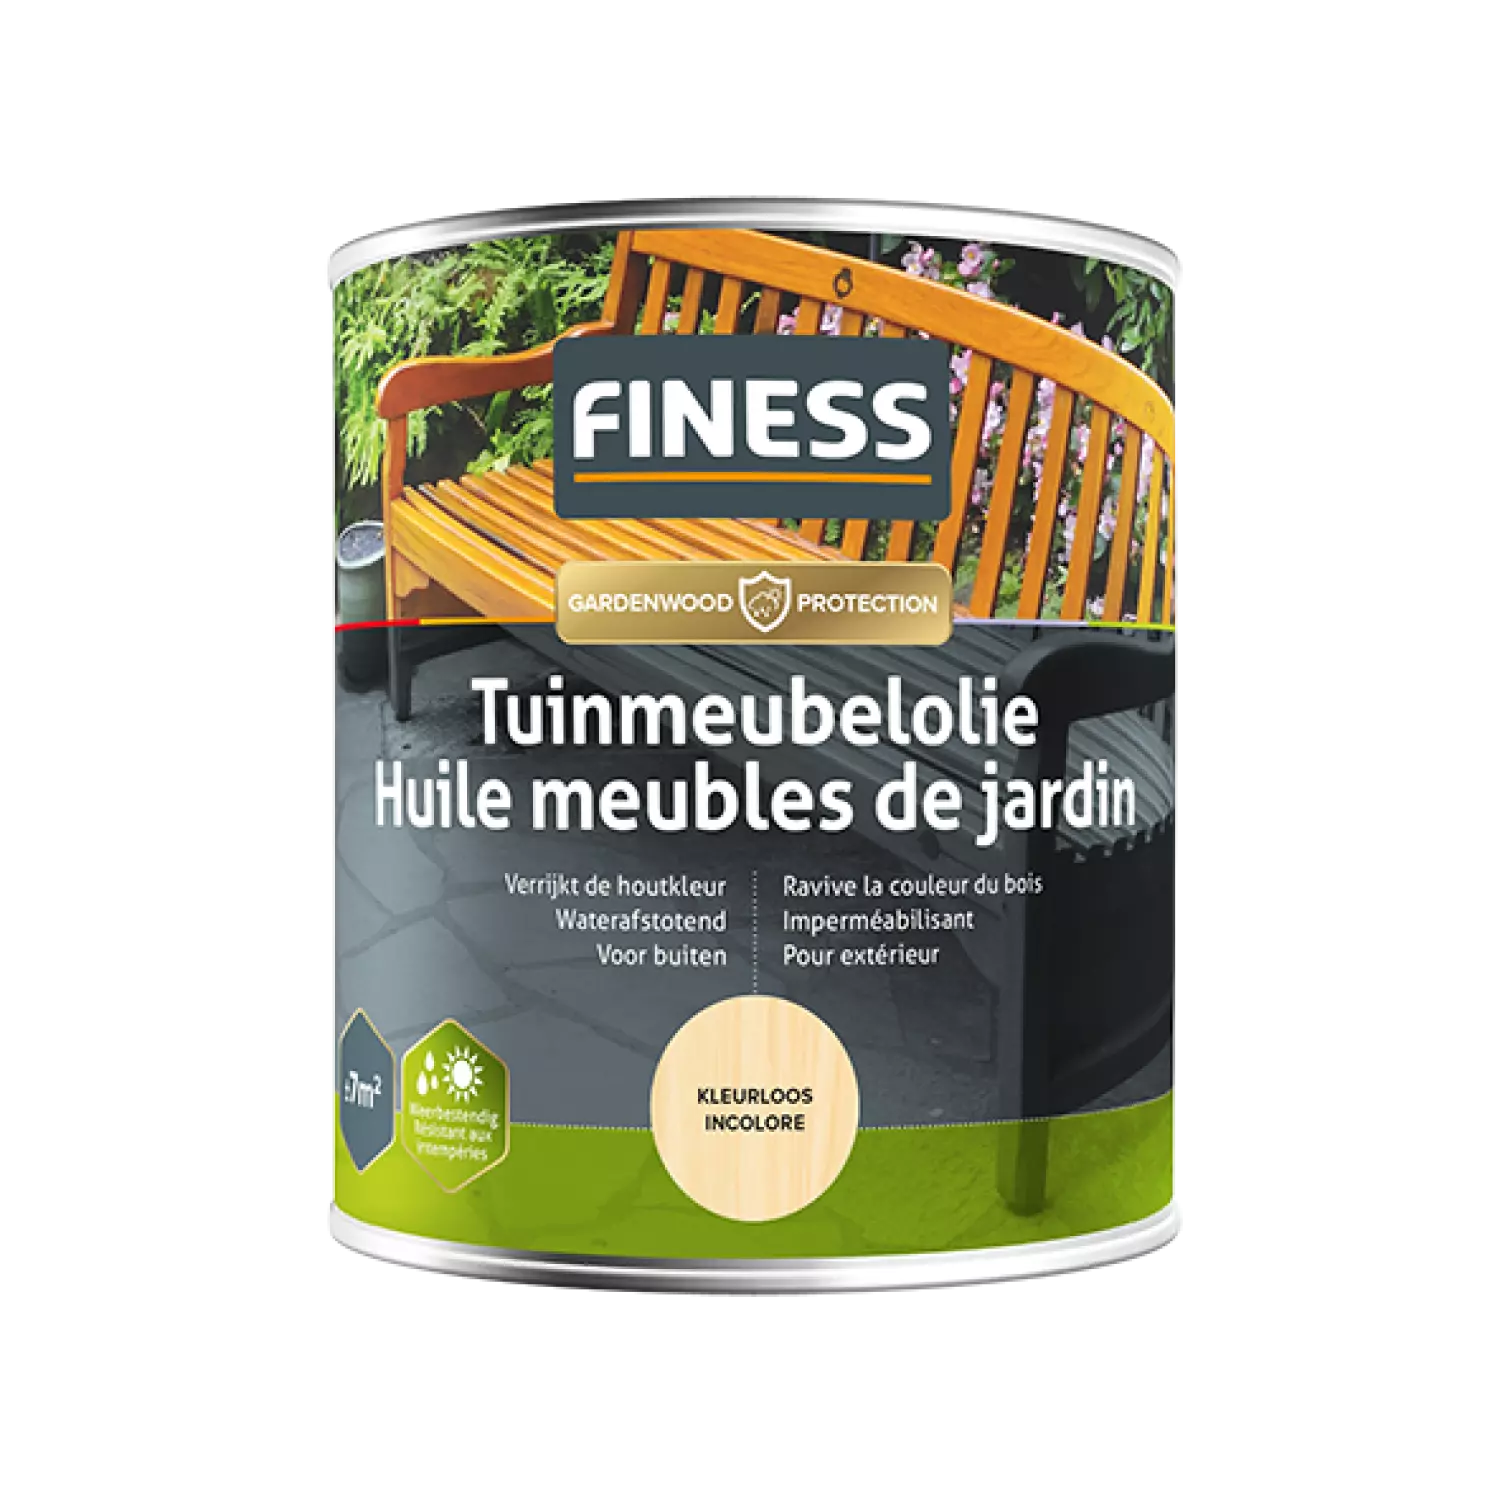 Finess Tuinmeubelolie - Kleurloos - 2,5L